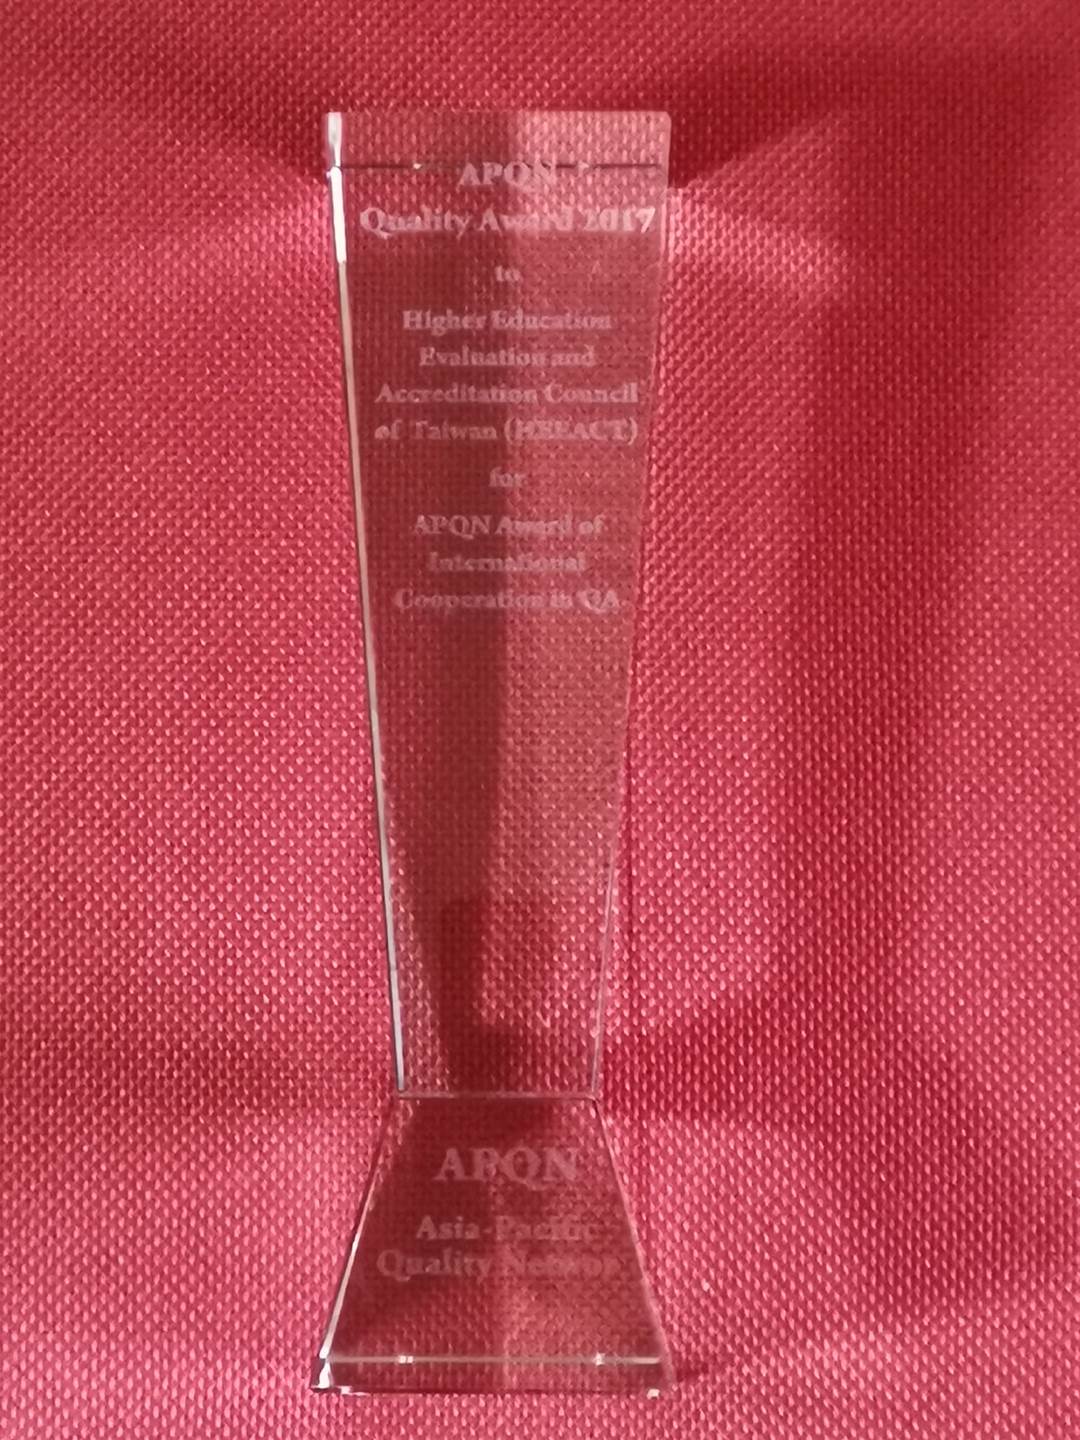 apqn quality award 2017-QA